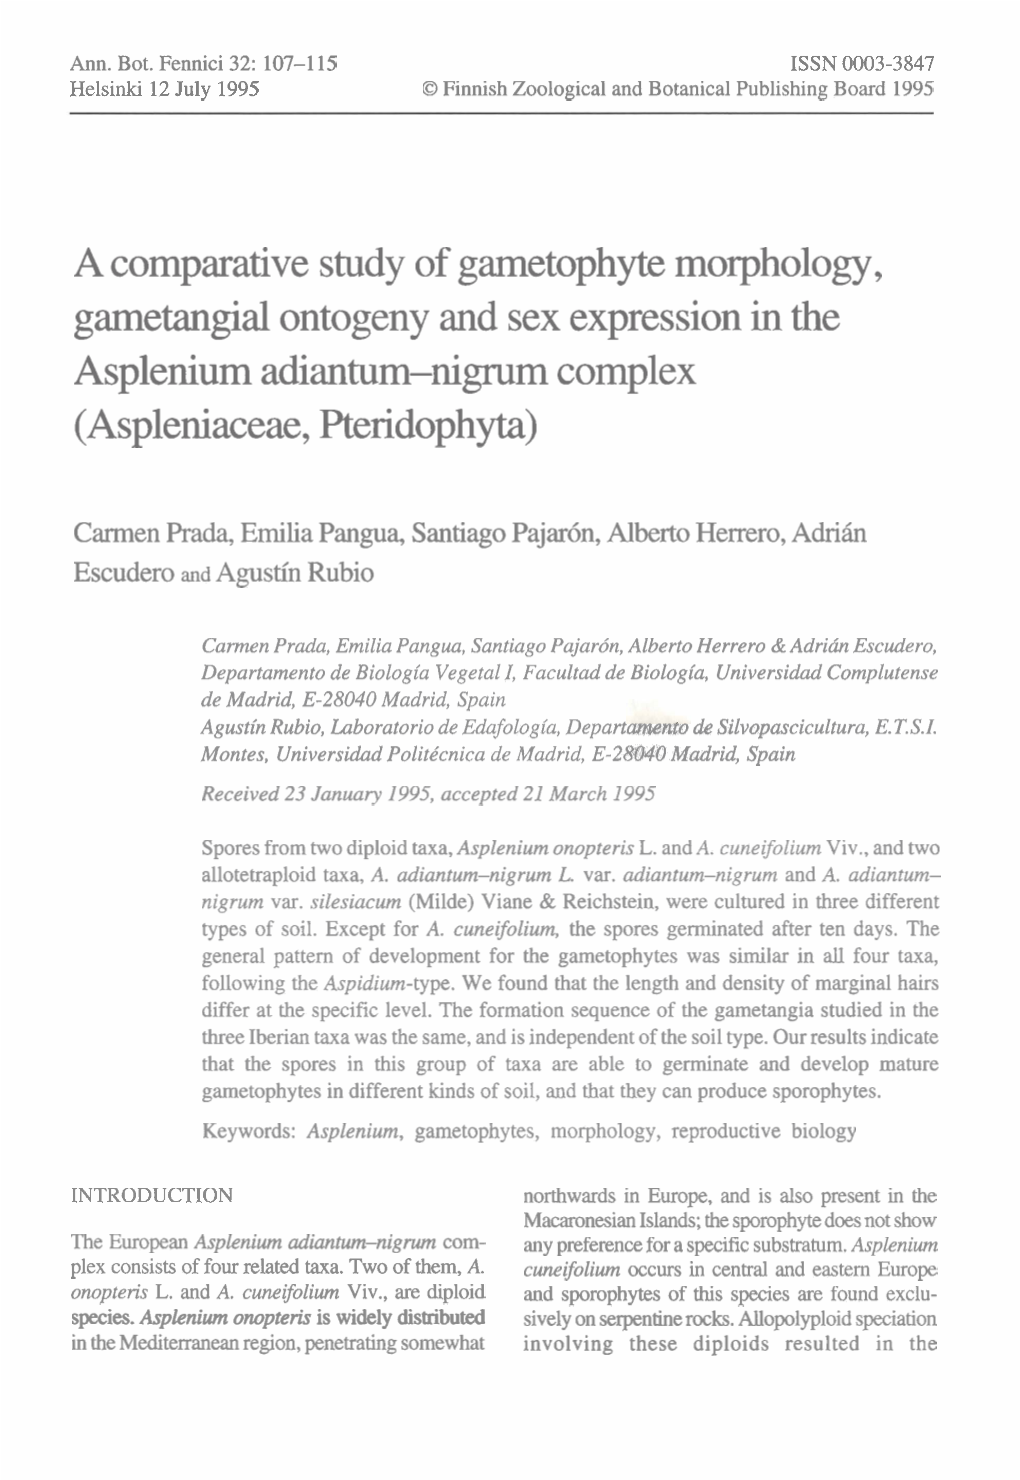 A Comparative Study of Gametophyte Morphology, Garnetangial Ontogeny and Sex Expression in the Asplenium Adiantum-Nigrum Complex (Aspleniaceae, Pteridophyta)